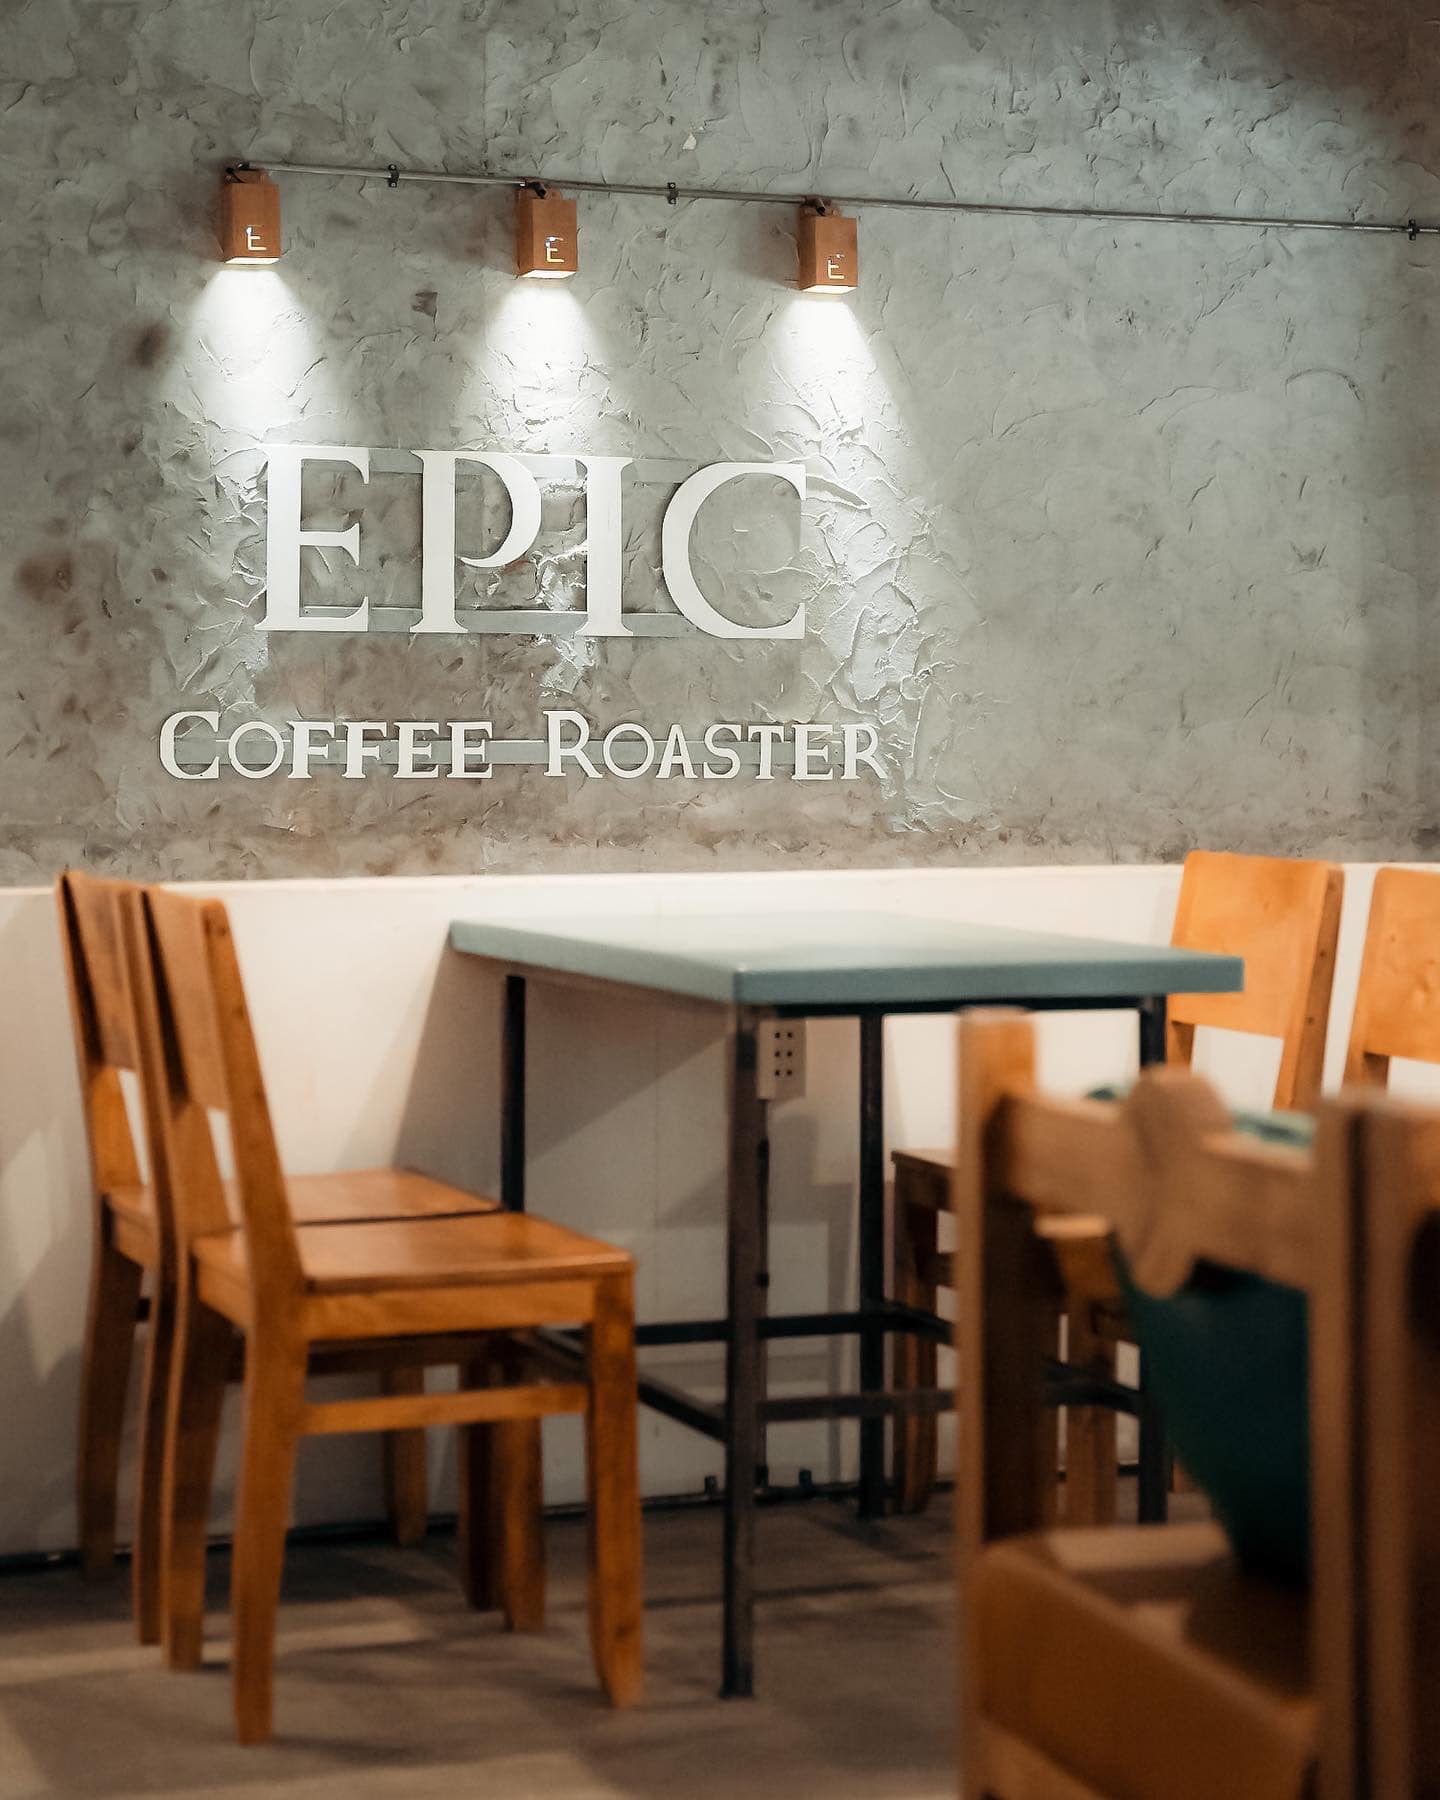 Epic Coffee Roaster